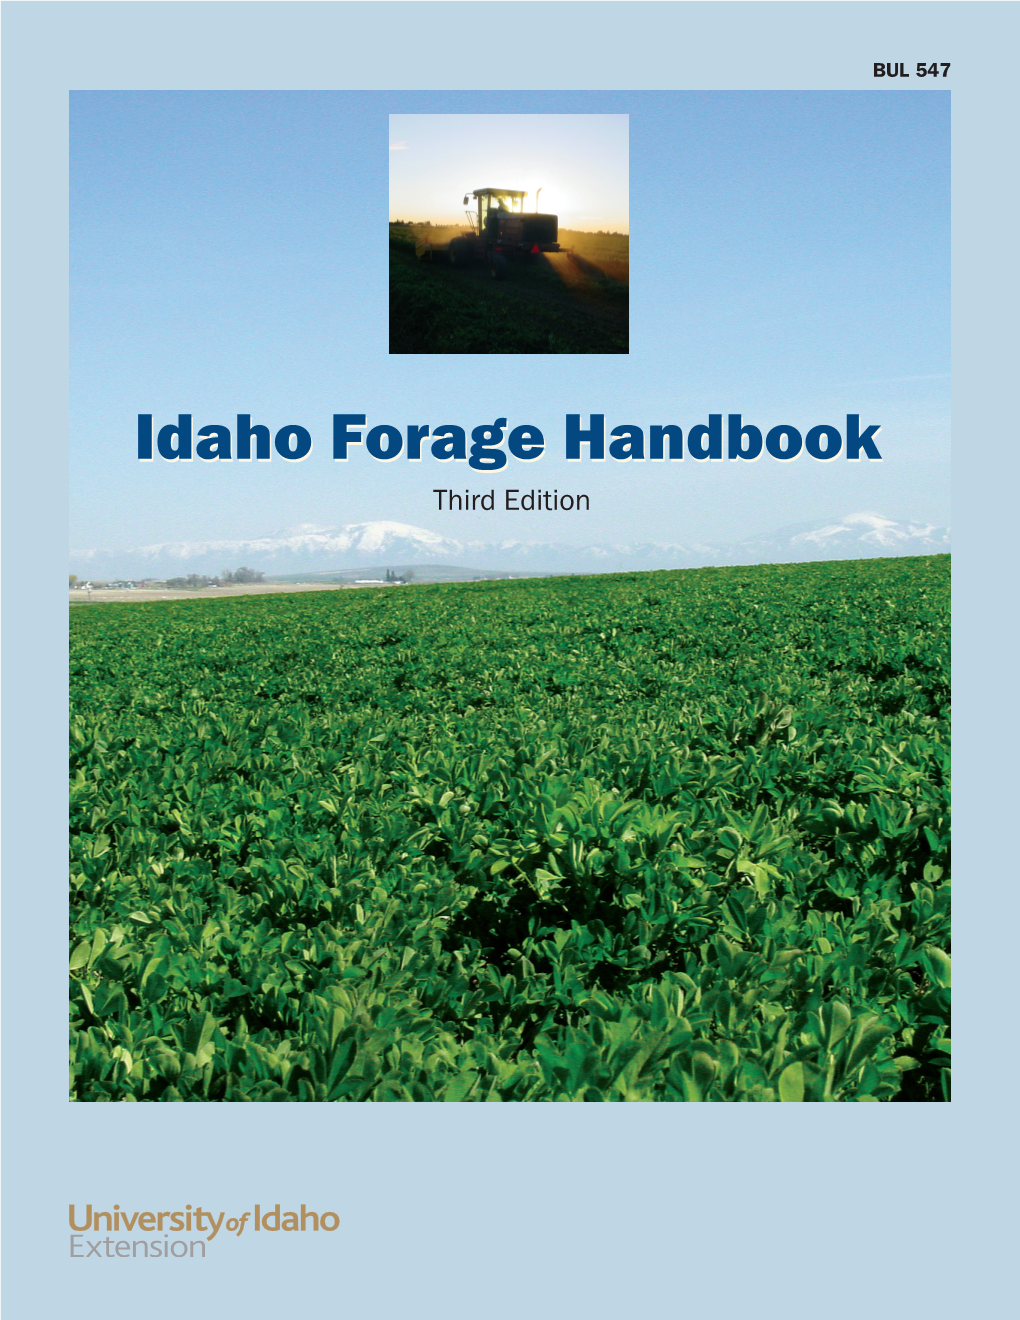 Idaho Forage Handbook Third Edition IDAHO FORAGE HANDBOOK Third Edition